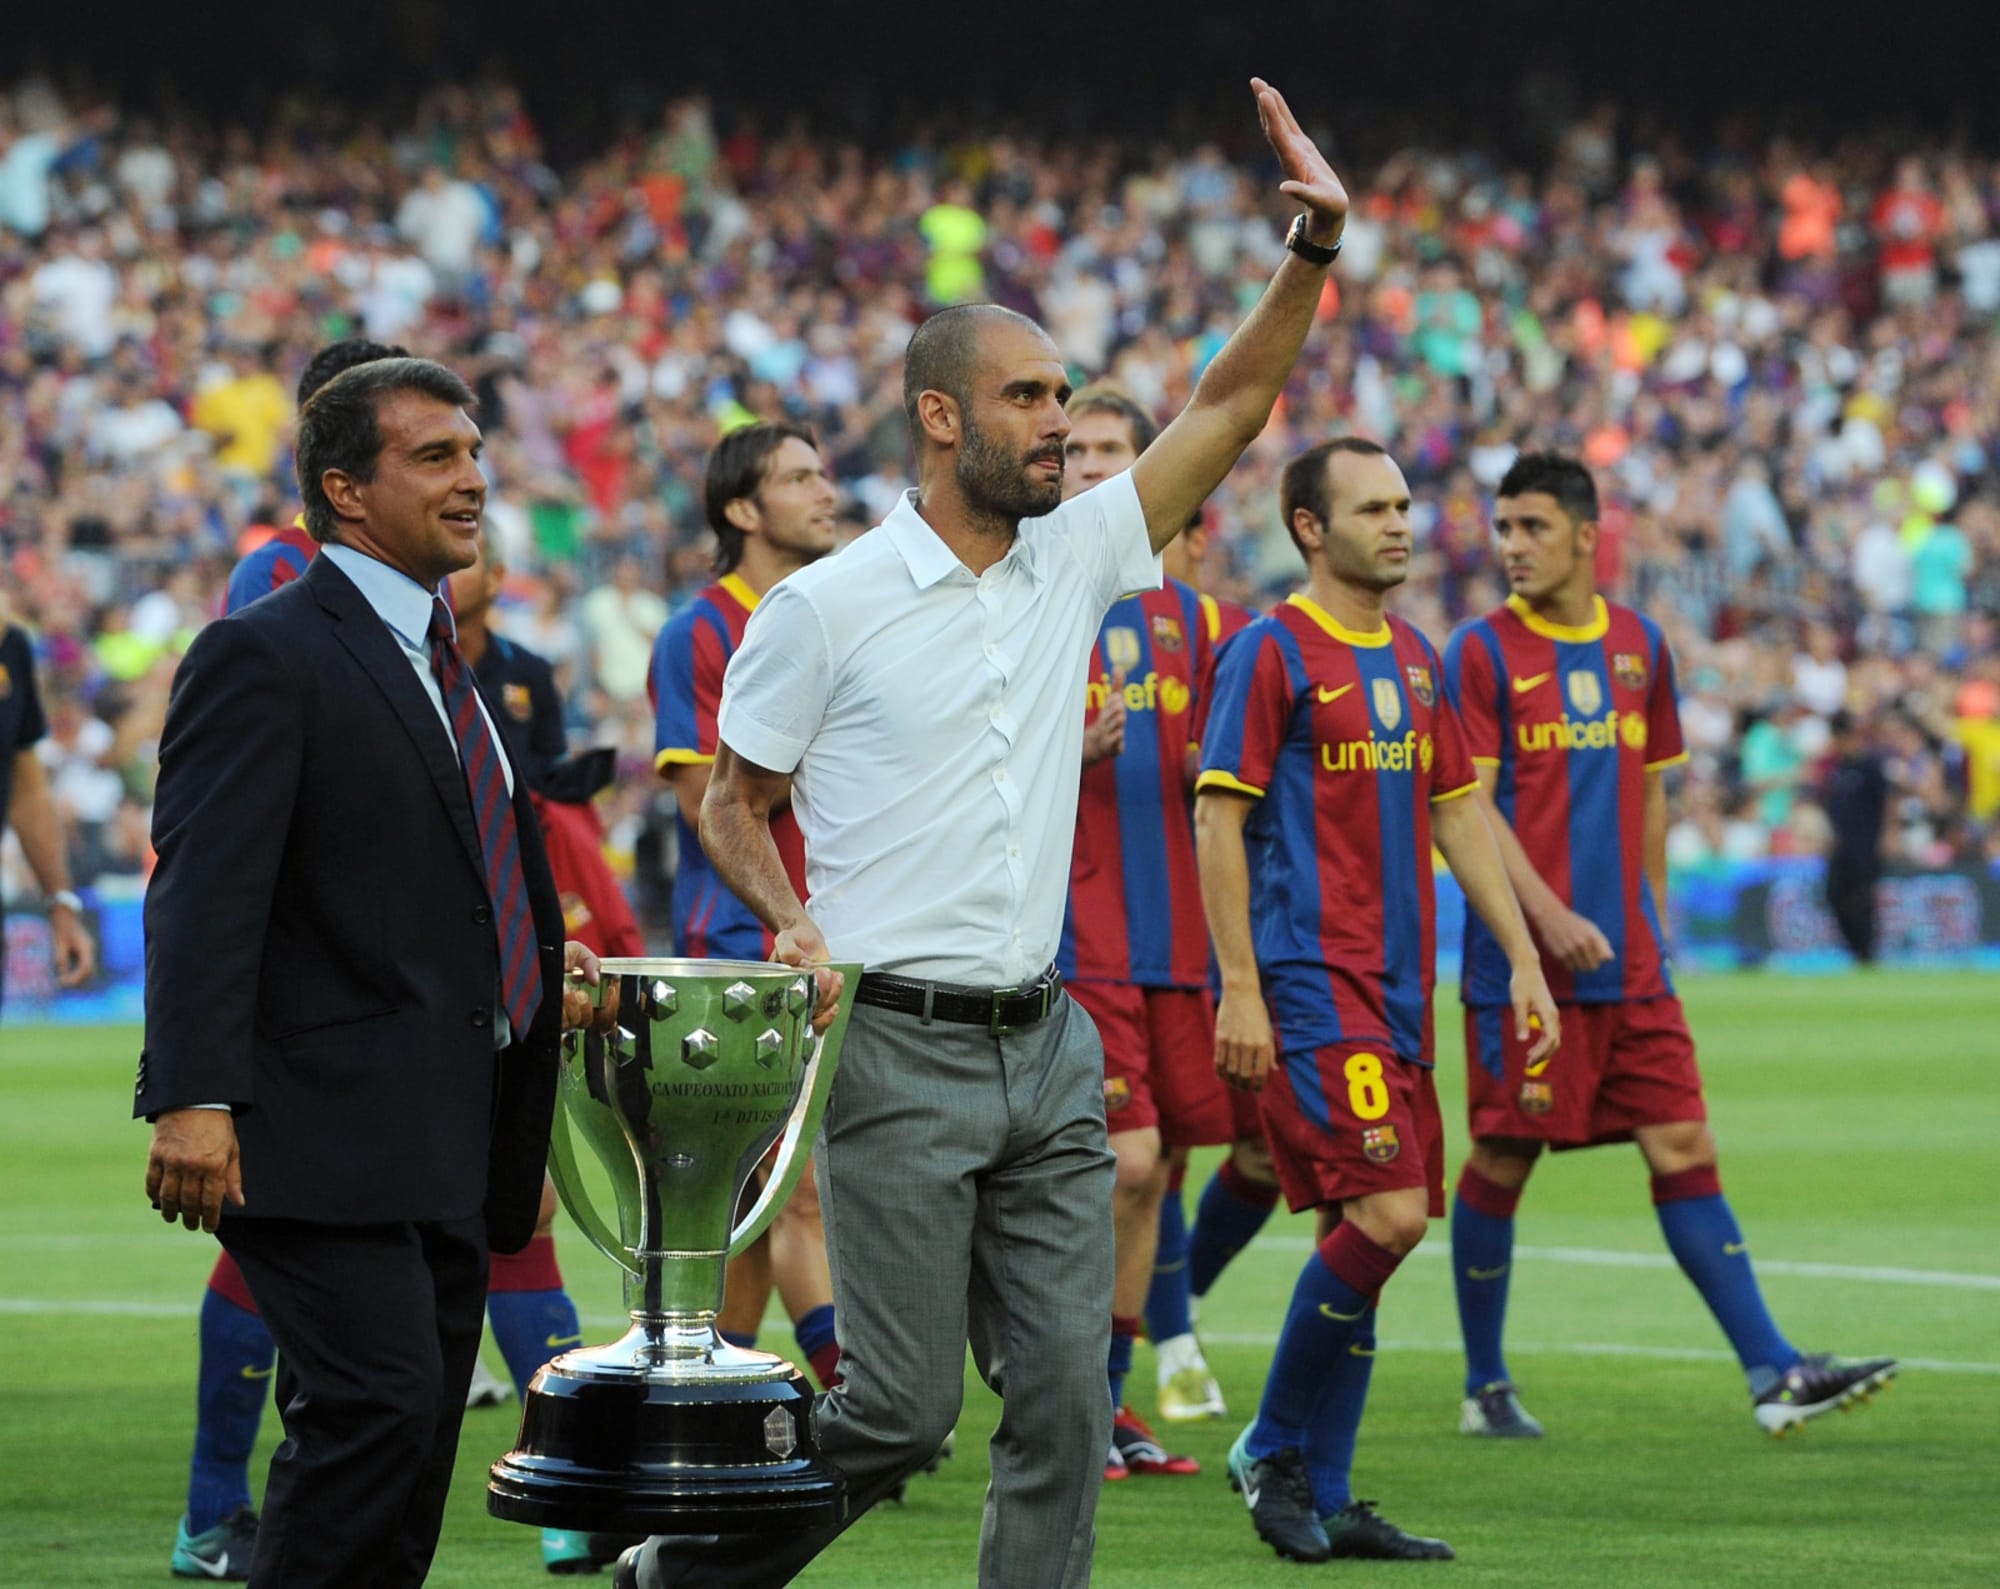 Man City winning UCL could ensure Guardiola-Barcelona reunion